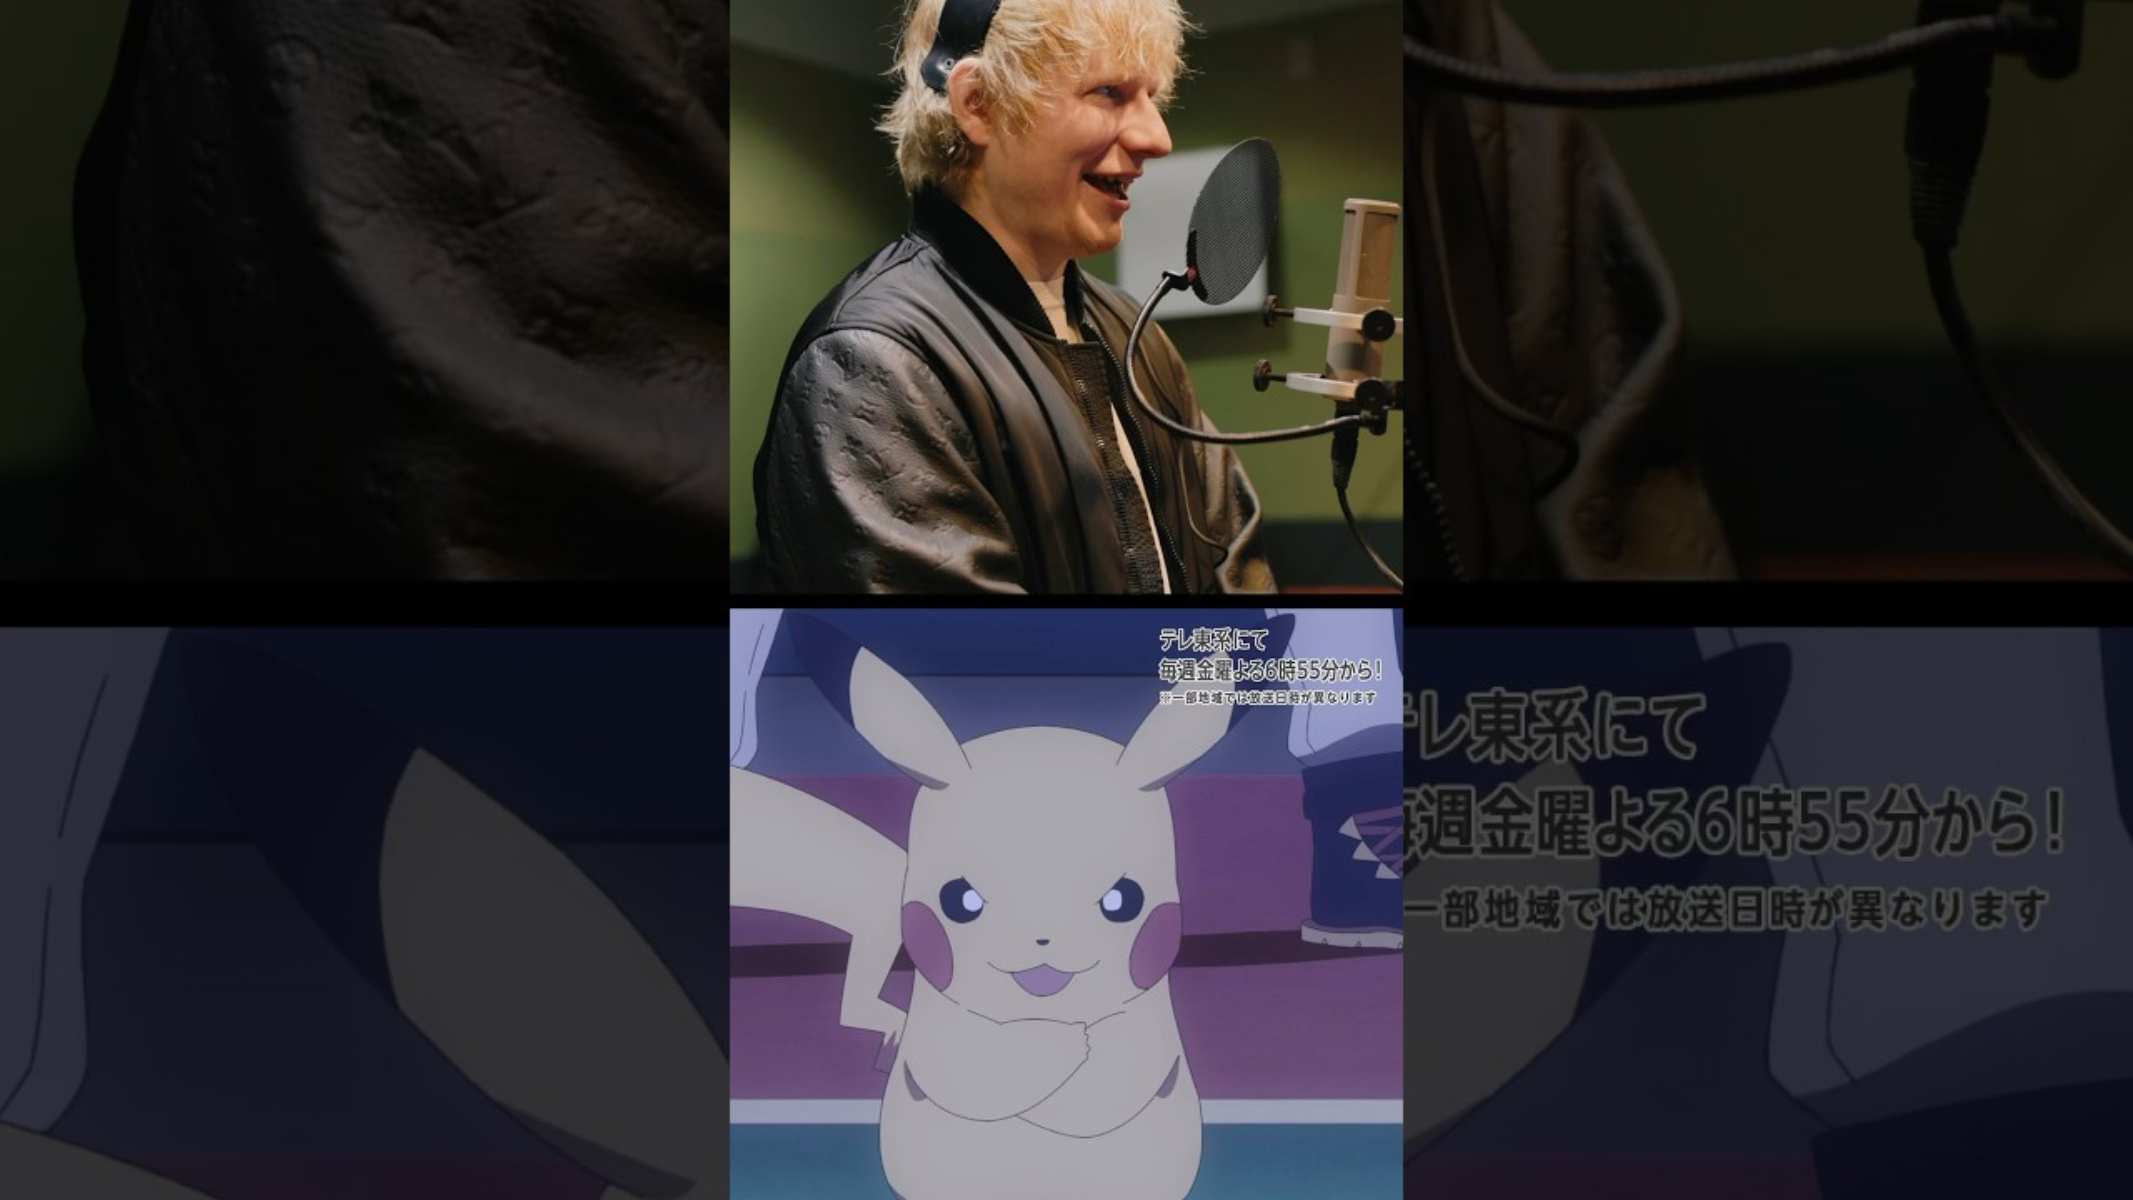 Pokémon, Ed Sheeran